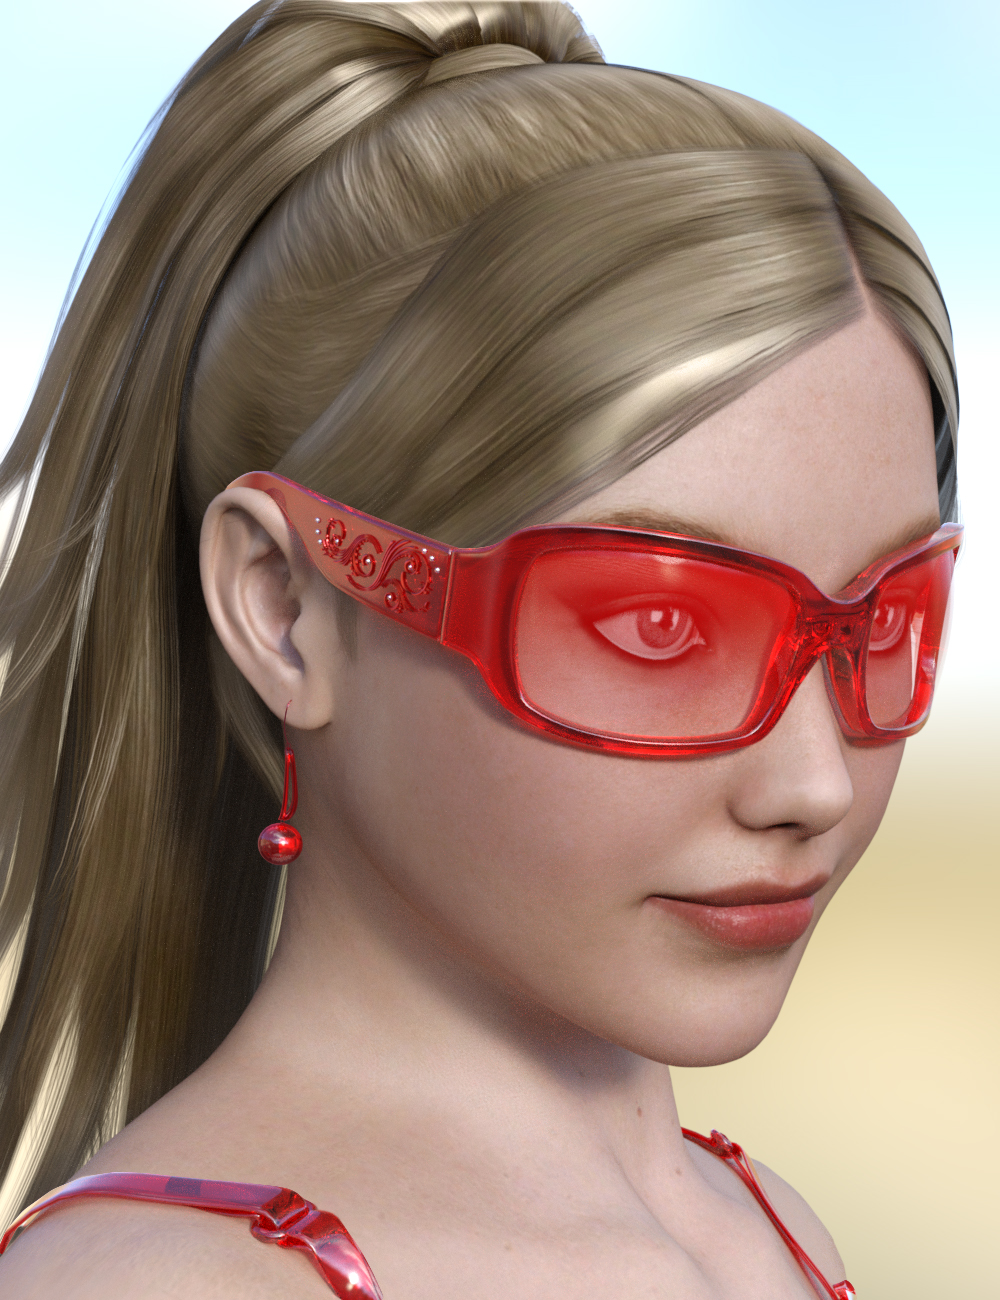 Eyewear Pack 3.0 - Glam by: Torinouta, 3D Models by Daz 3D